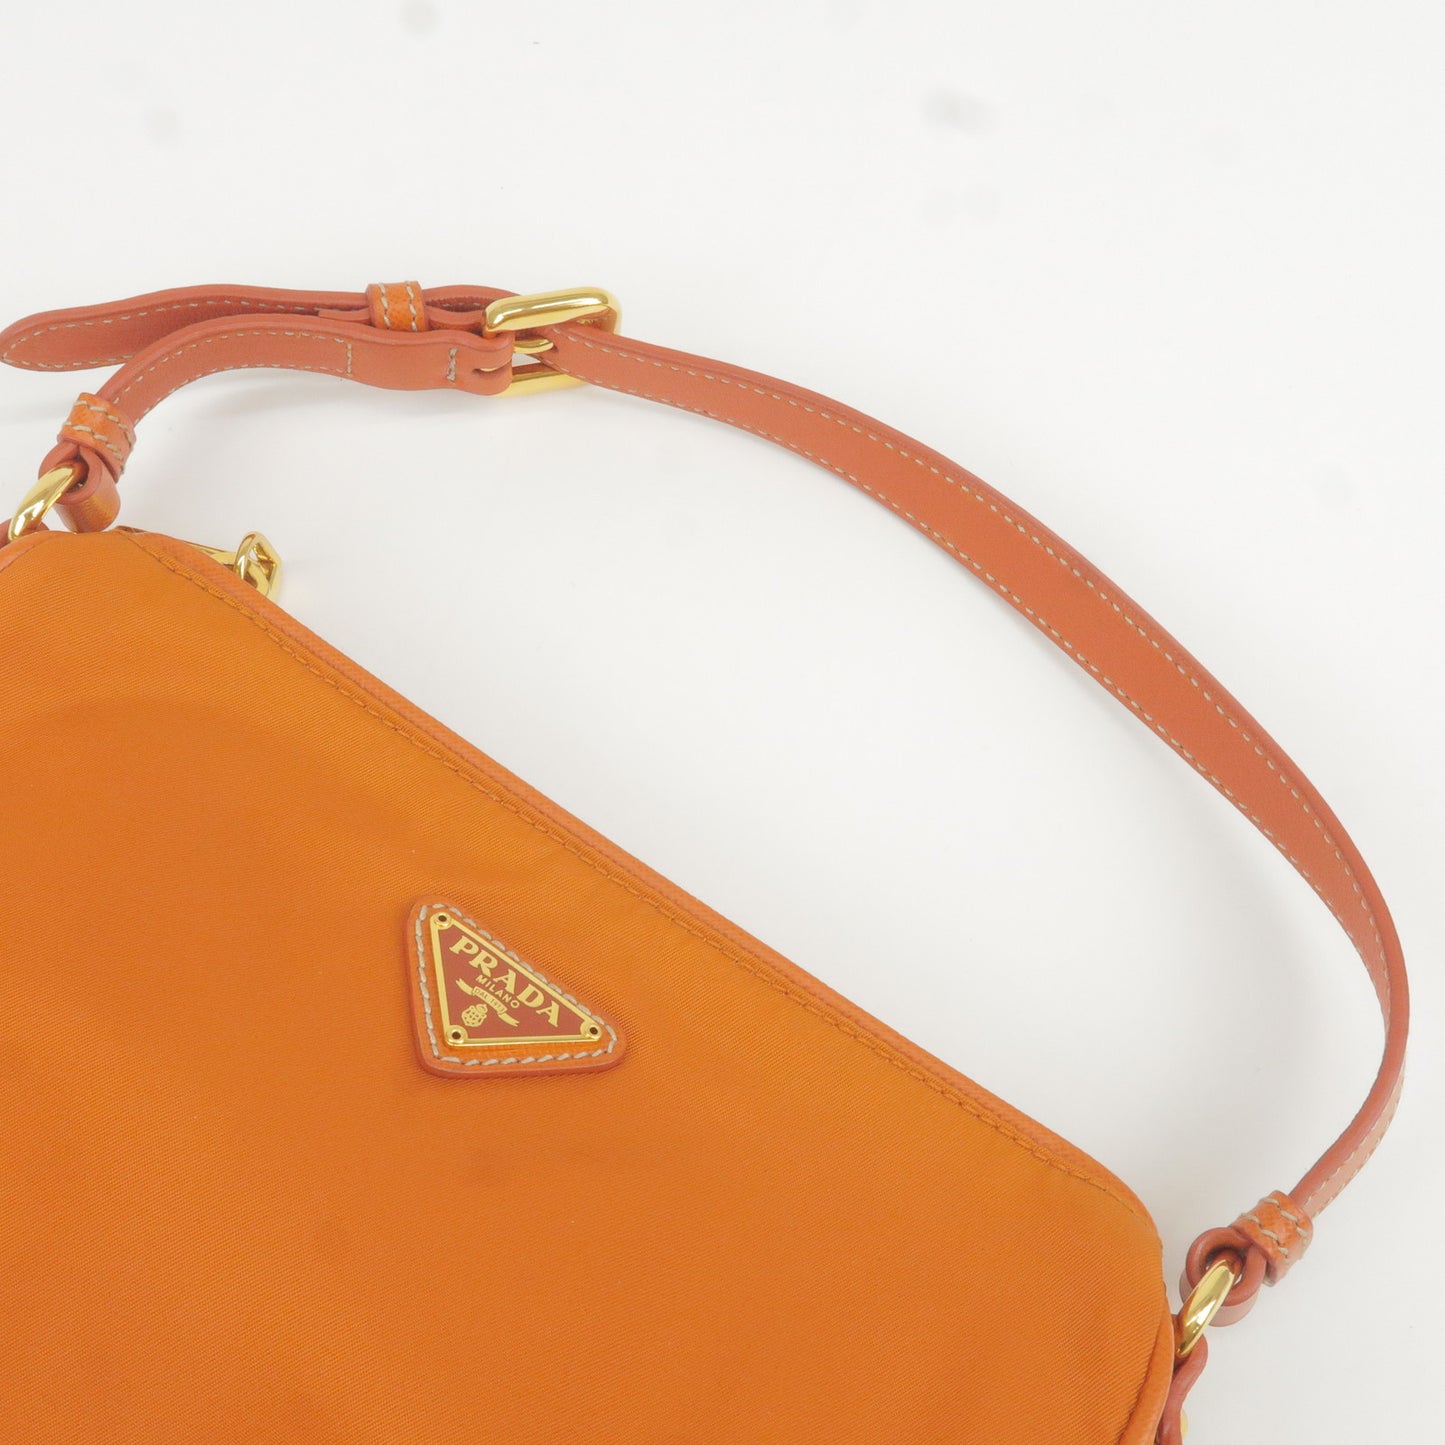 PRADA Logo Nylon Leather Shoulder Bag Pouch Orange BN1833